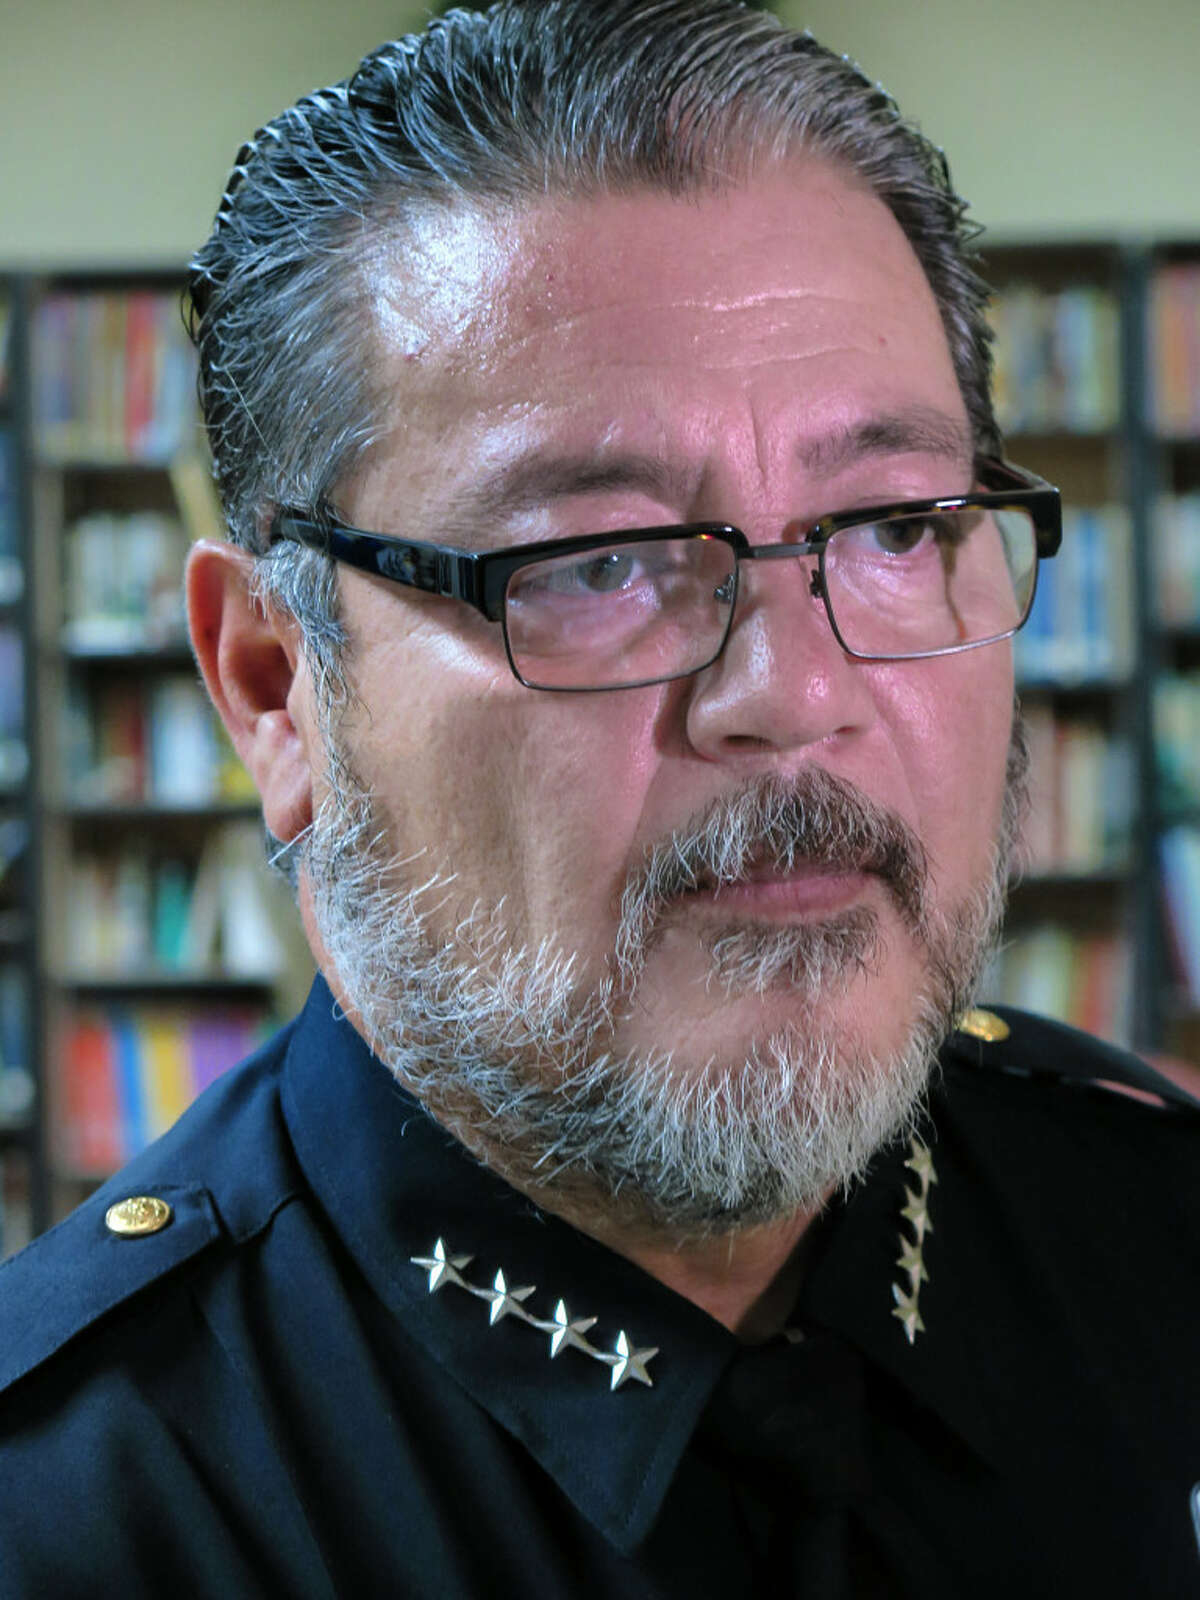 Rio Bravo Police Chief Rene Cervantes is pictured in this file photo.